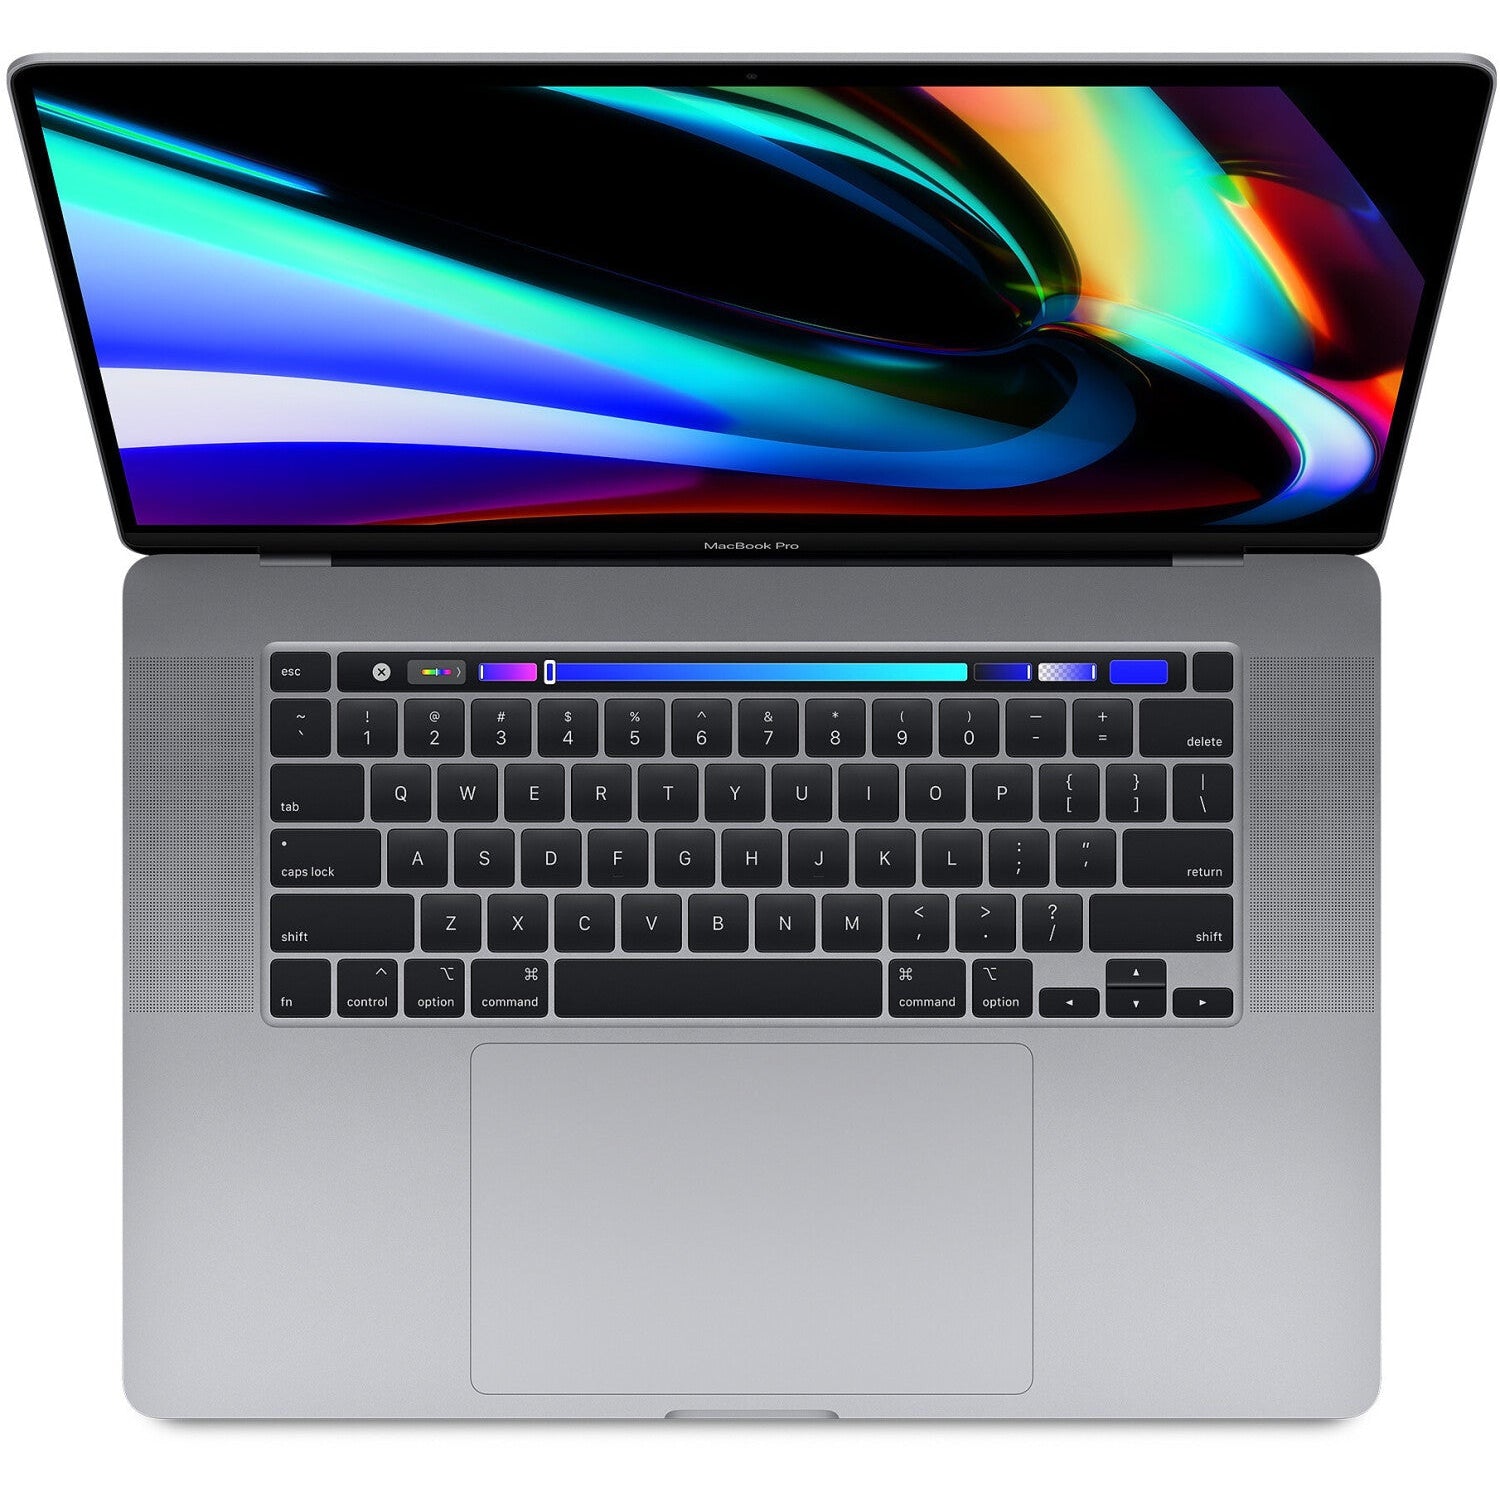 Apple MacBook Pro 16" MVVJ2B/A (2019) Laptop, Intel Core i7, 16GB, 512GB, Space Grey - Refurbished Good